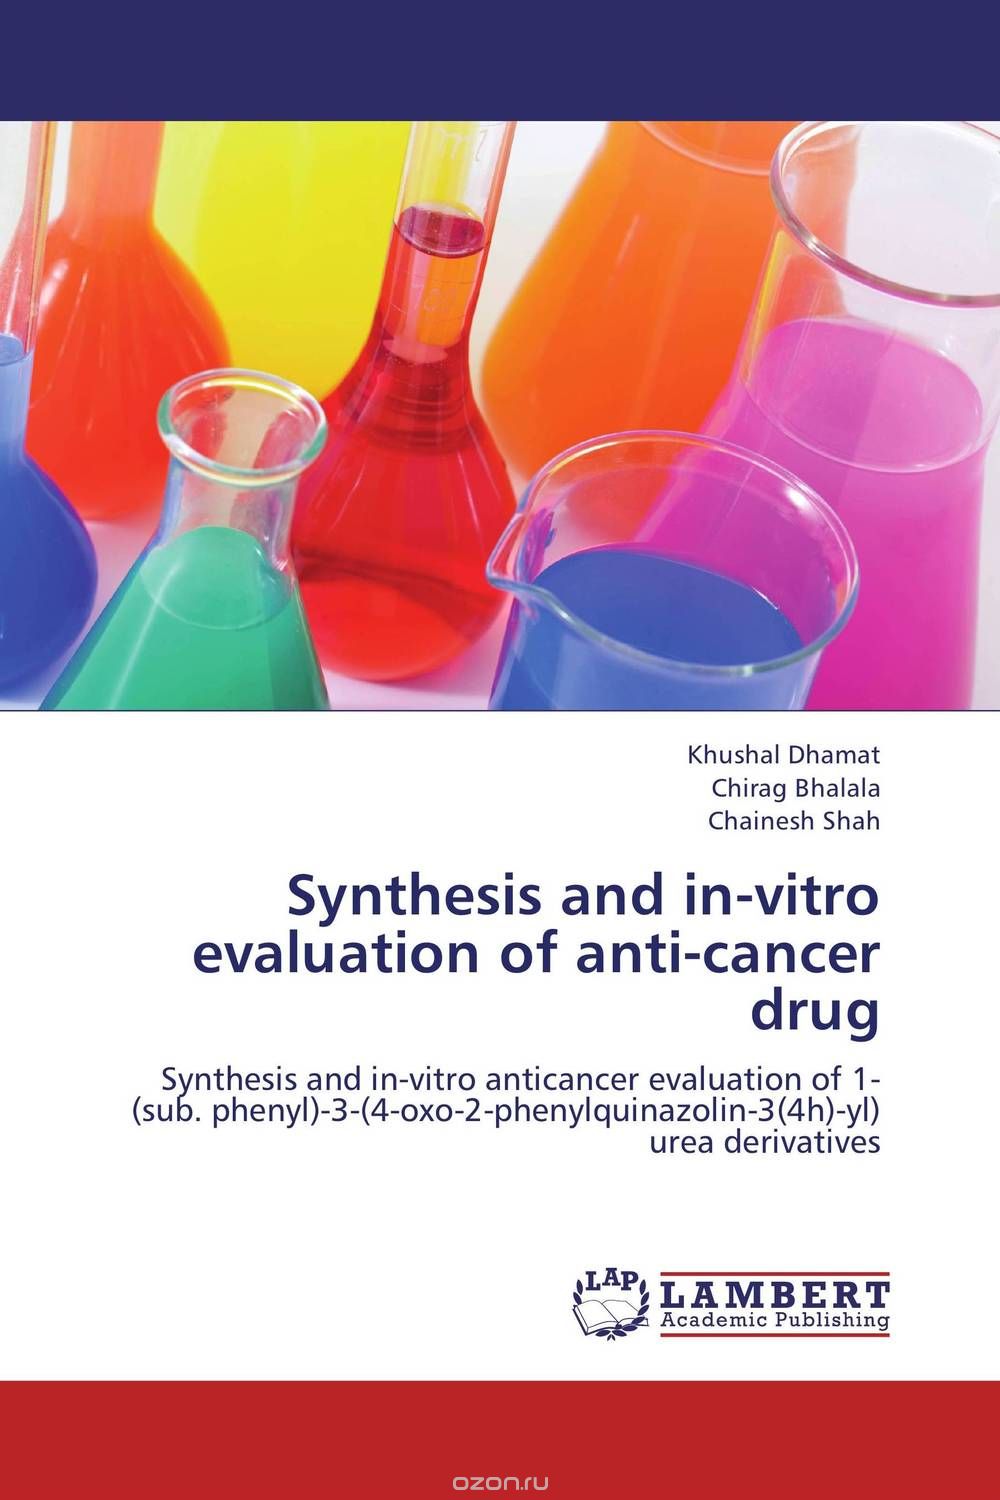 Скачать книгу "Synthesis and in-vitro evaluation of anti-cancer drug"